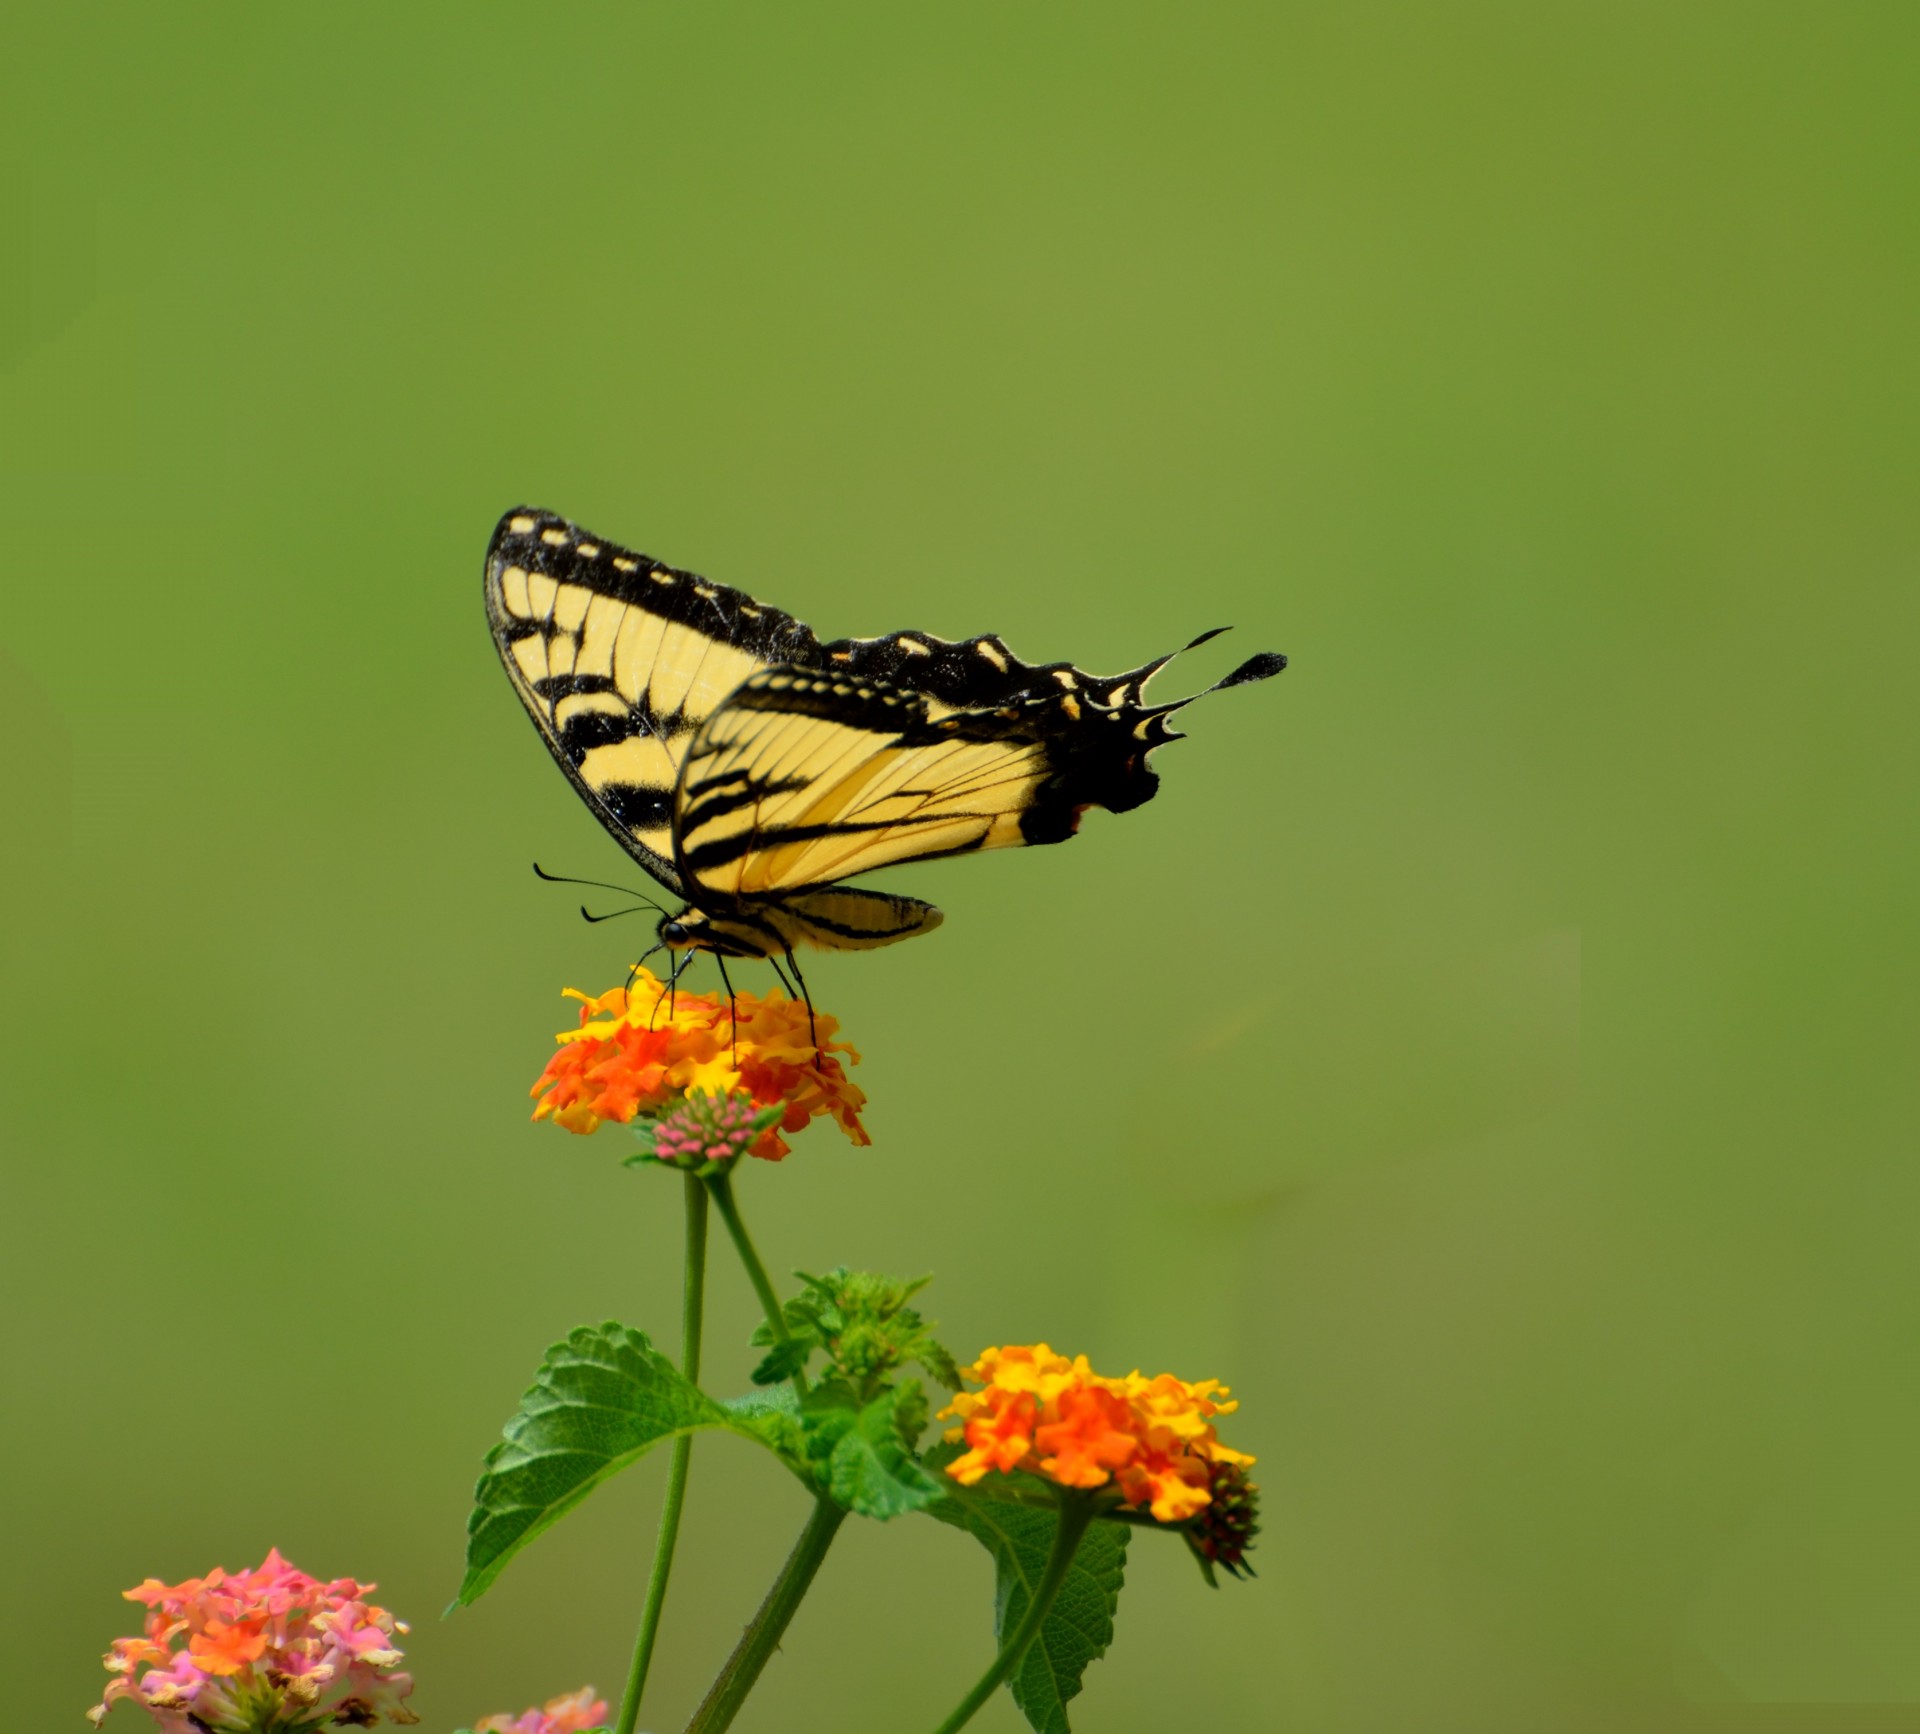 Swallowtail butterfly on top of lantana flowers